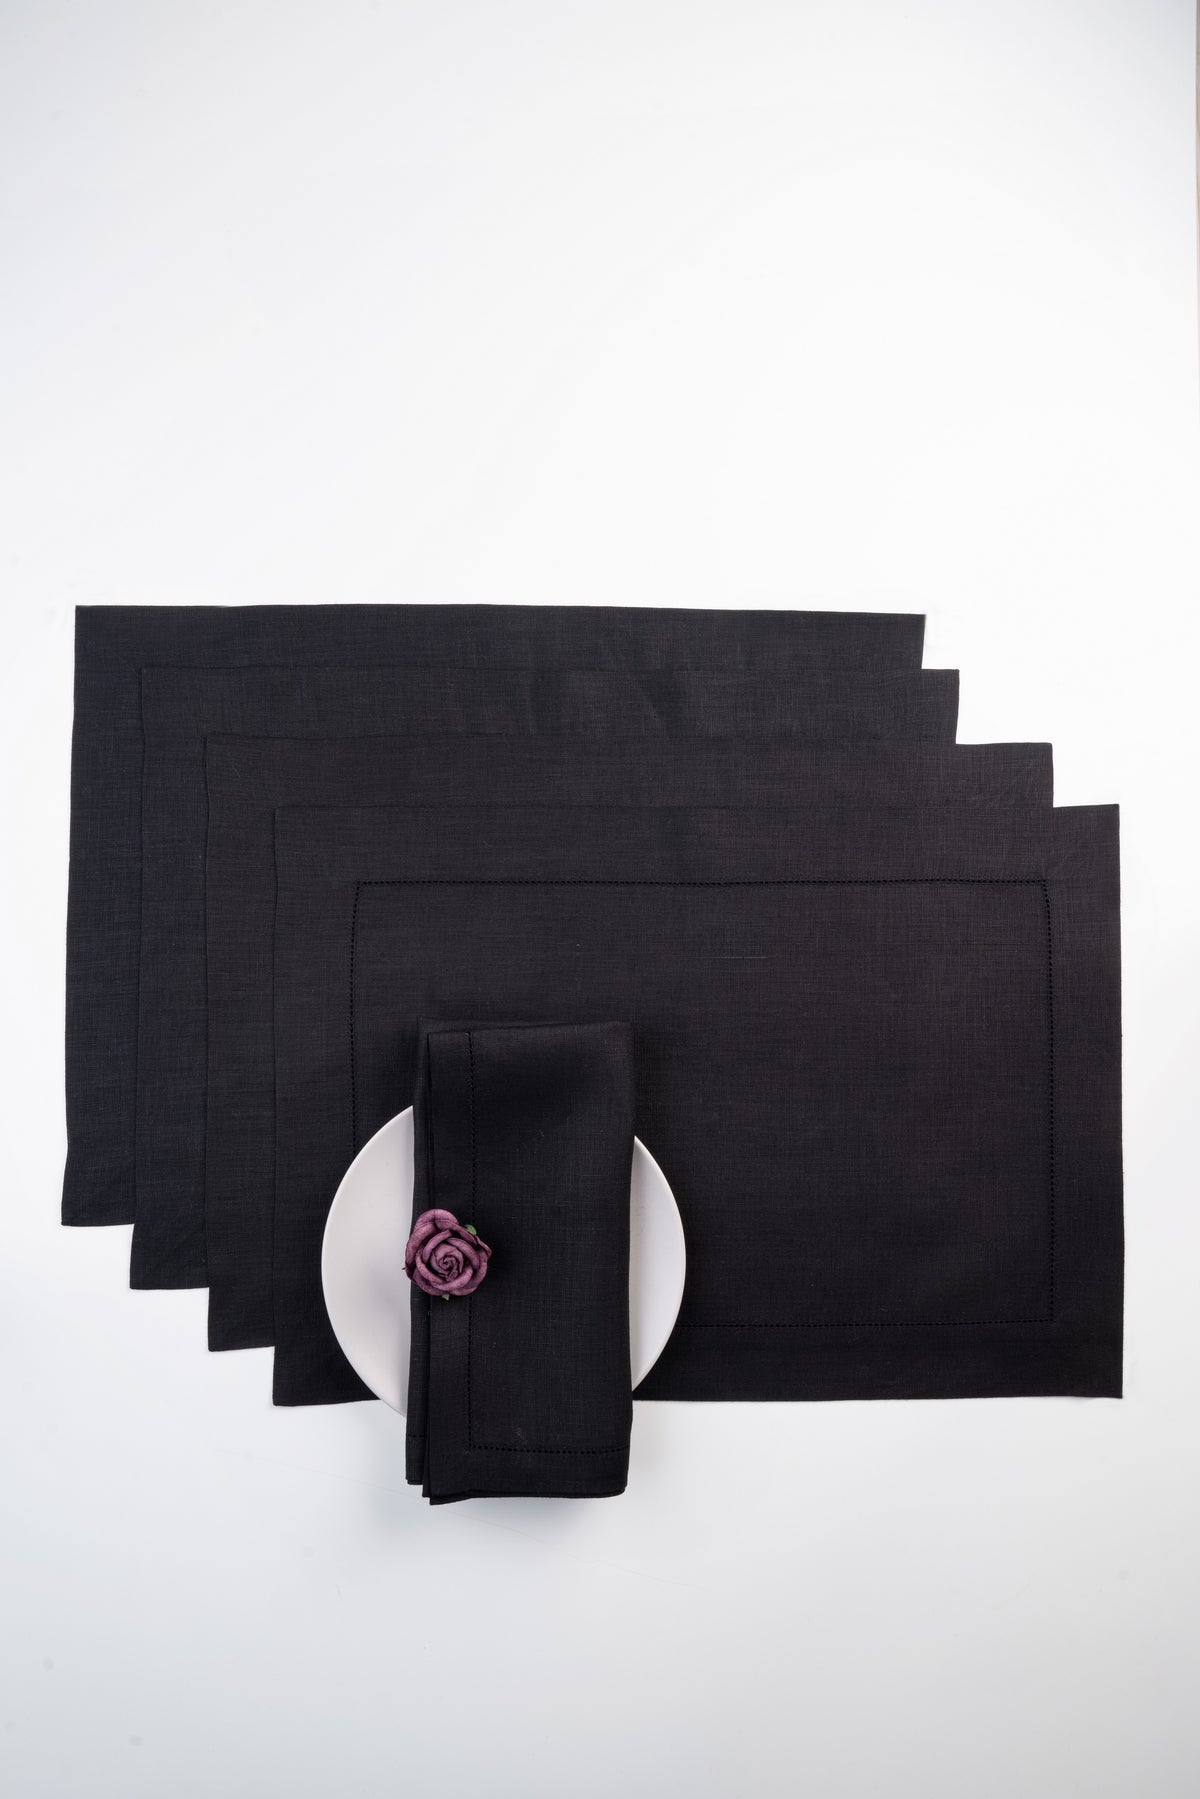 Black Linen Placemats 14 x 19 Inch Set of 6 - Hemstitch